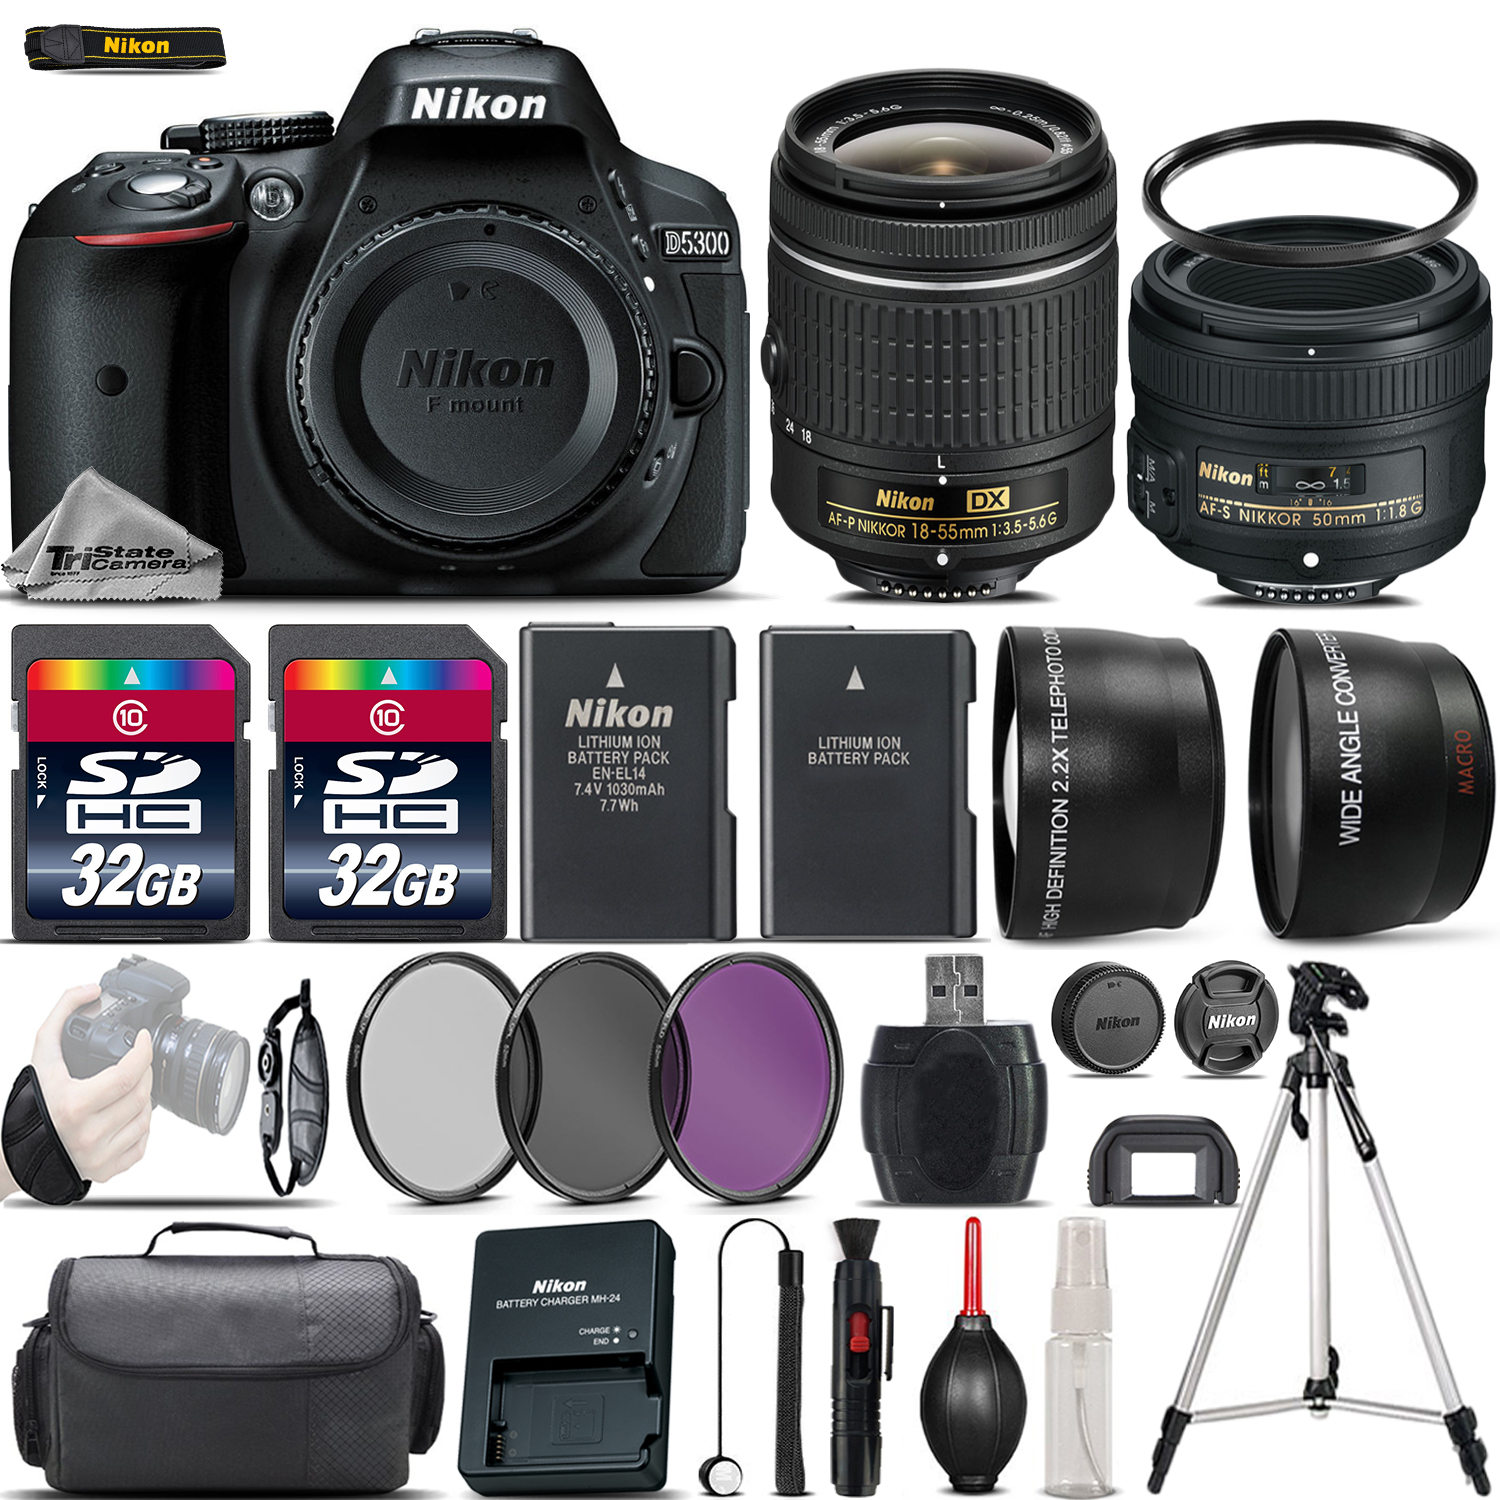 D5300 Digital SLR Camera + 18-55mm VR + 50mm 1.8 + 64GB & More -4 Lens Kit *FREE SHIPPING*